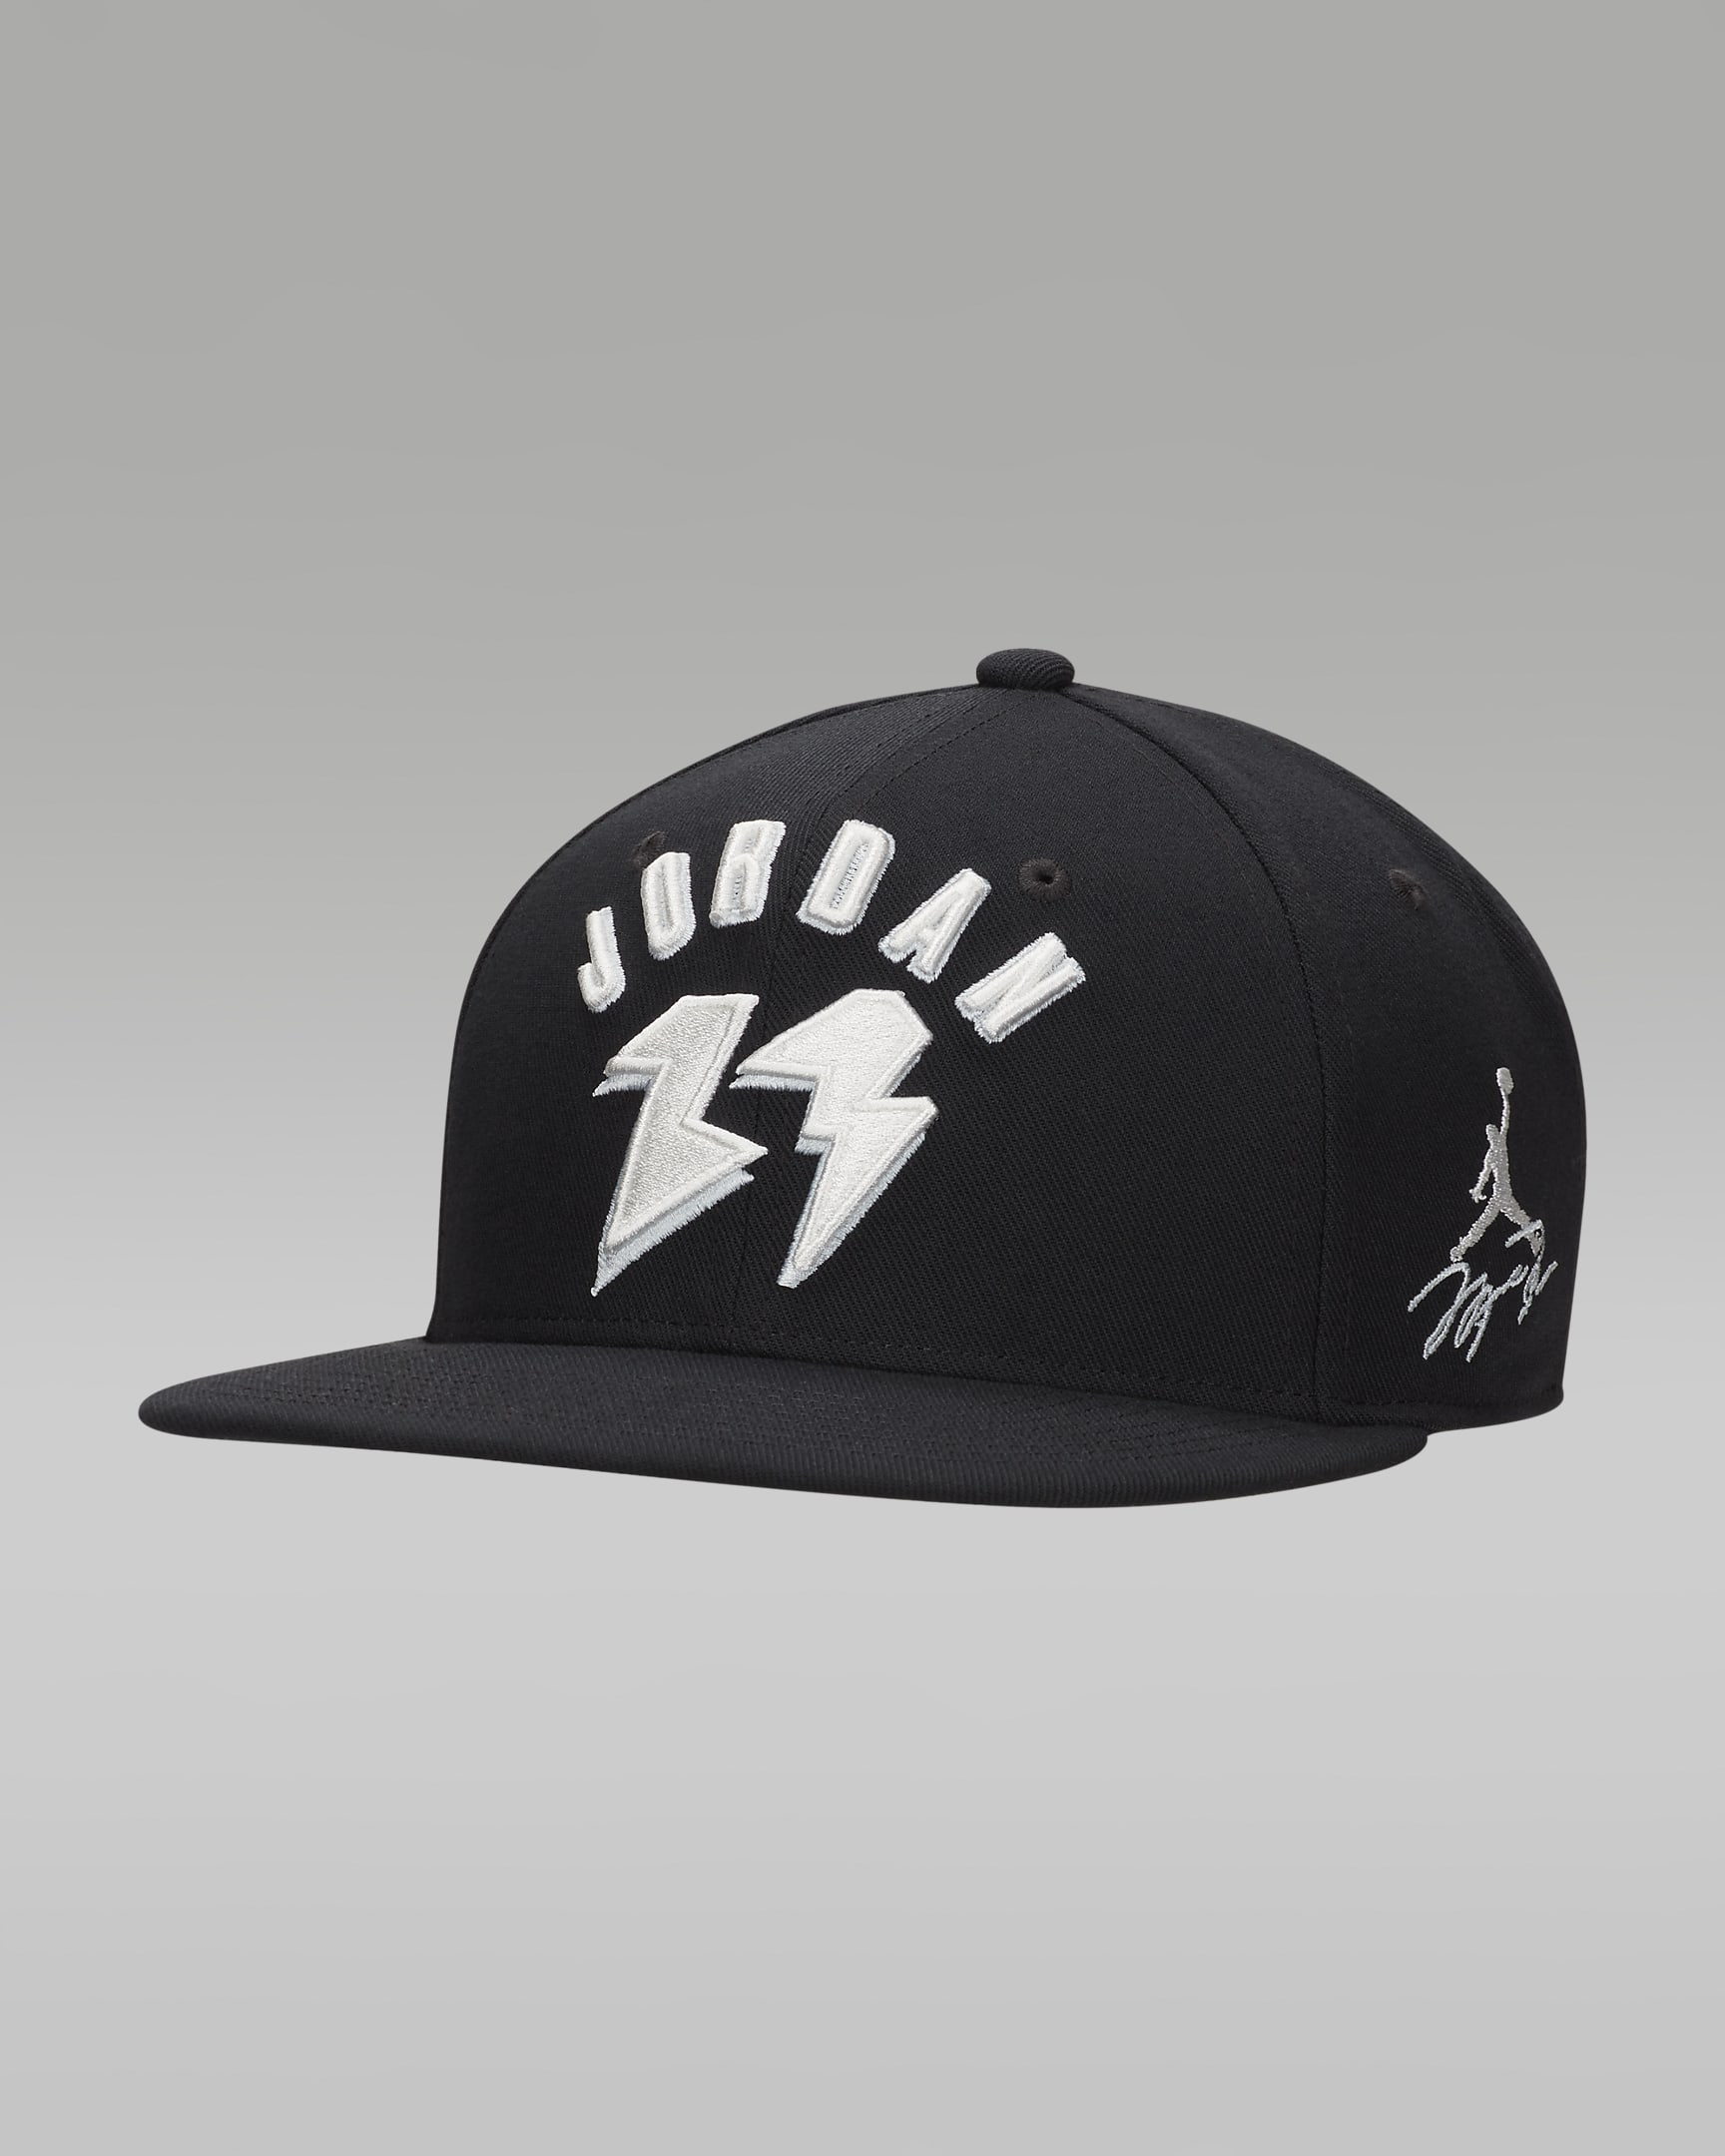 Jordan Flight MVP Pro Cap Adjustable Structured Hat. Nike SI